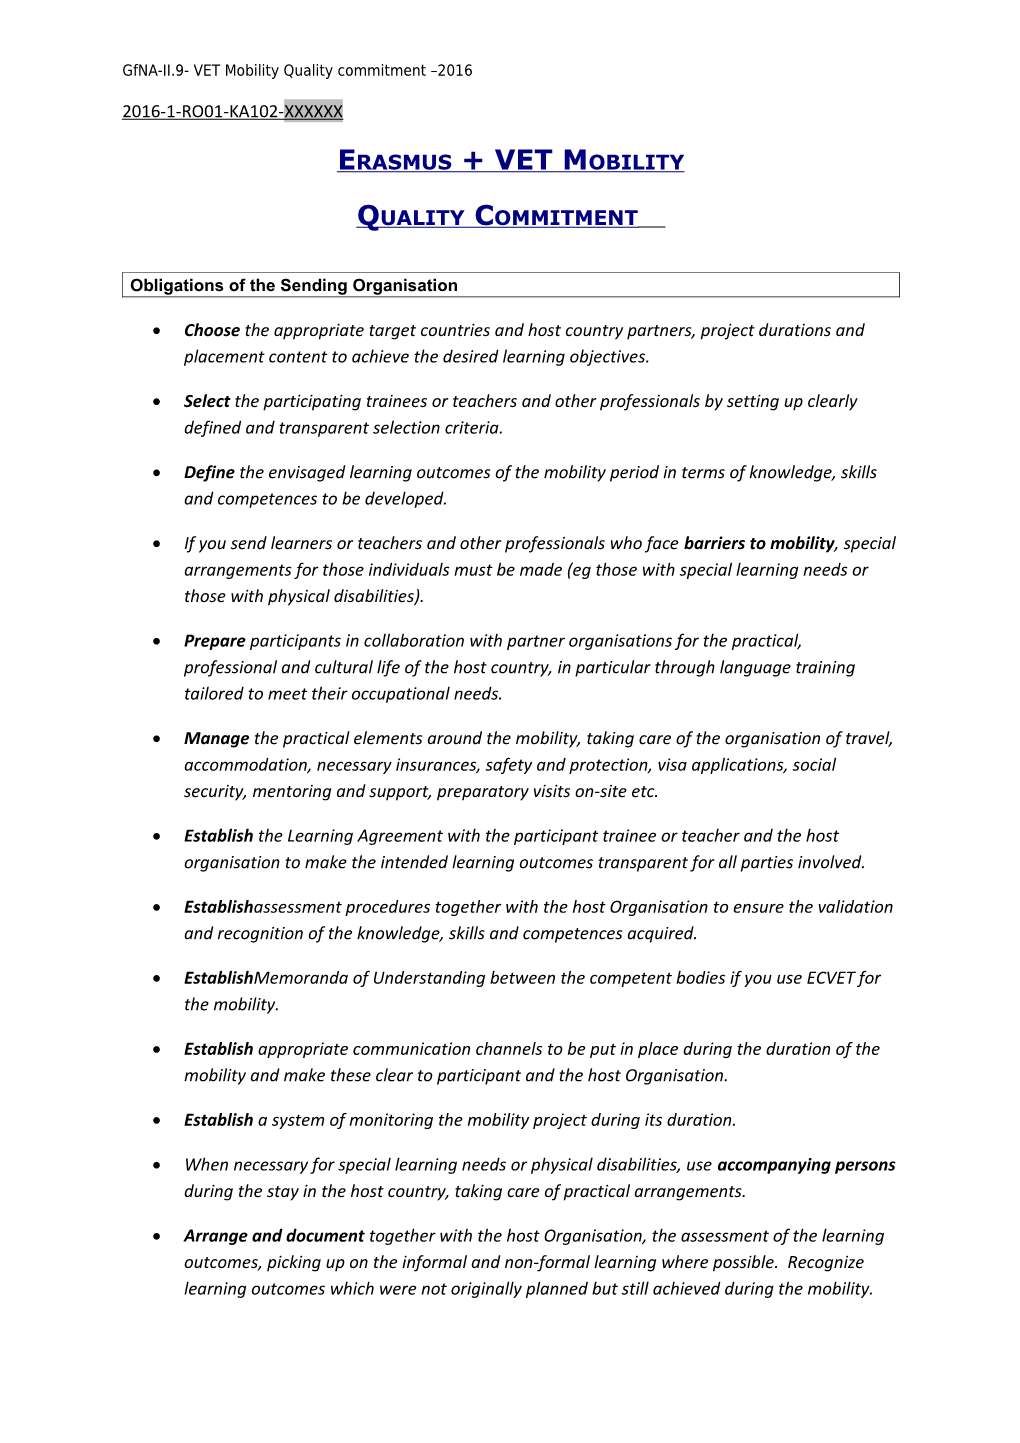 Gfna-II.9- VET Mobility Quality Commitment 2016